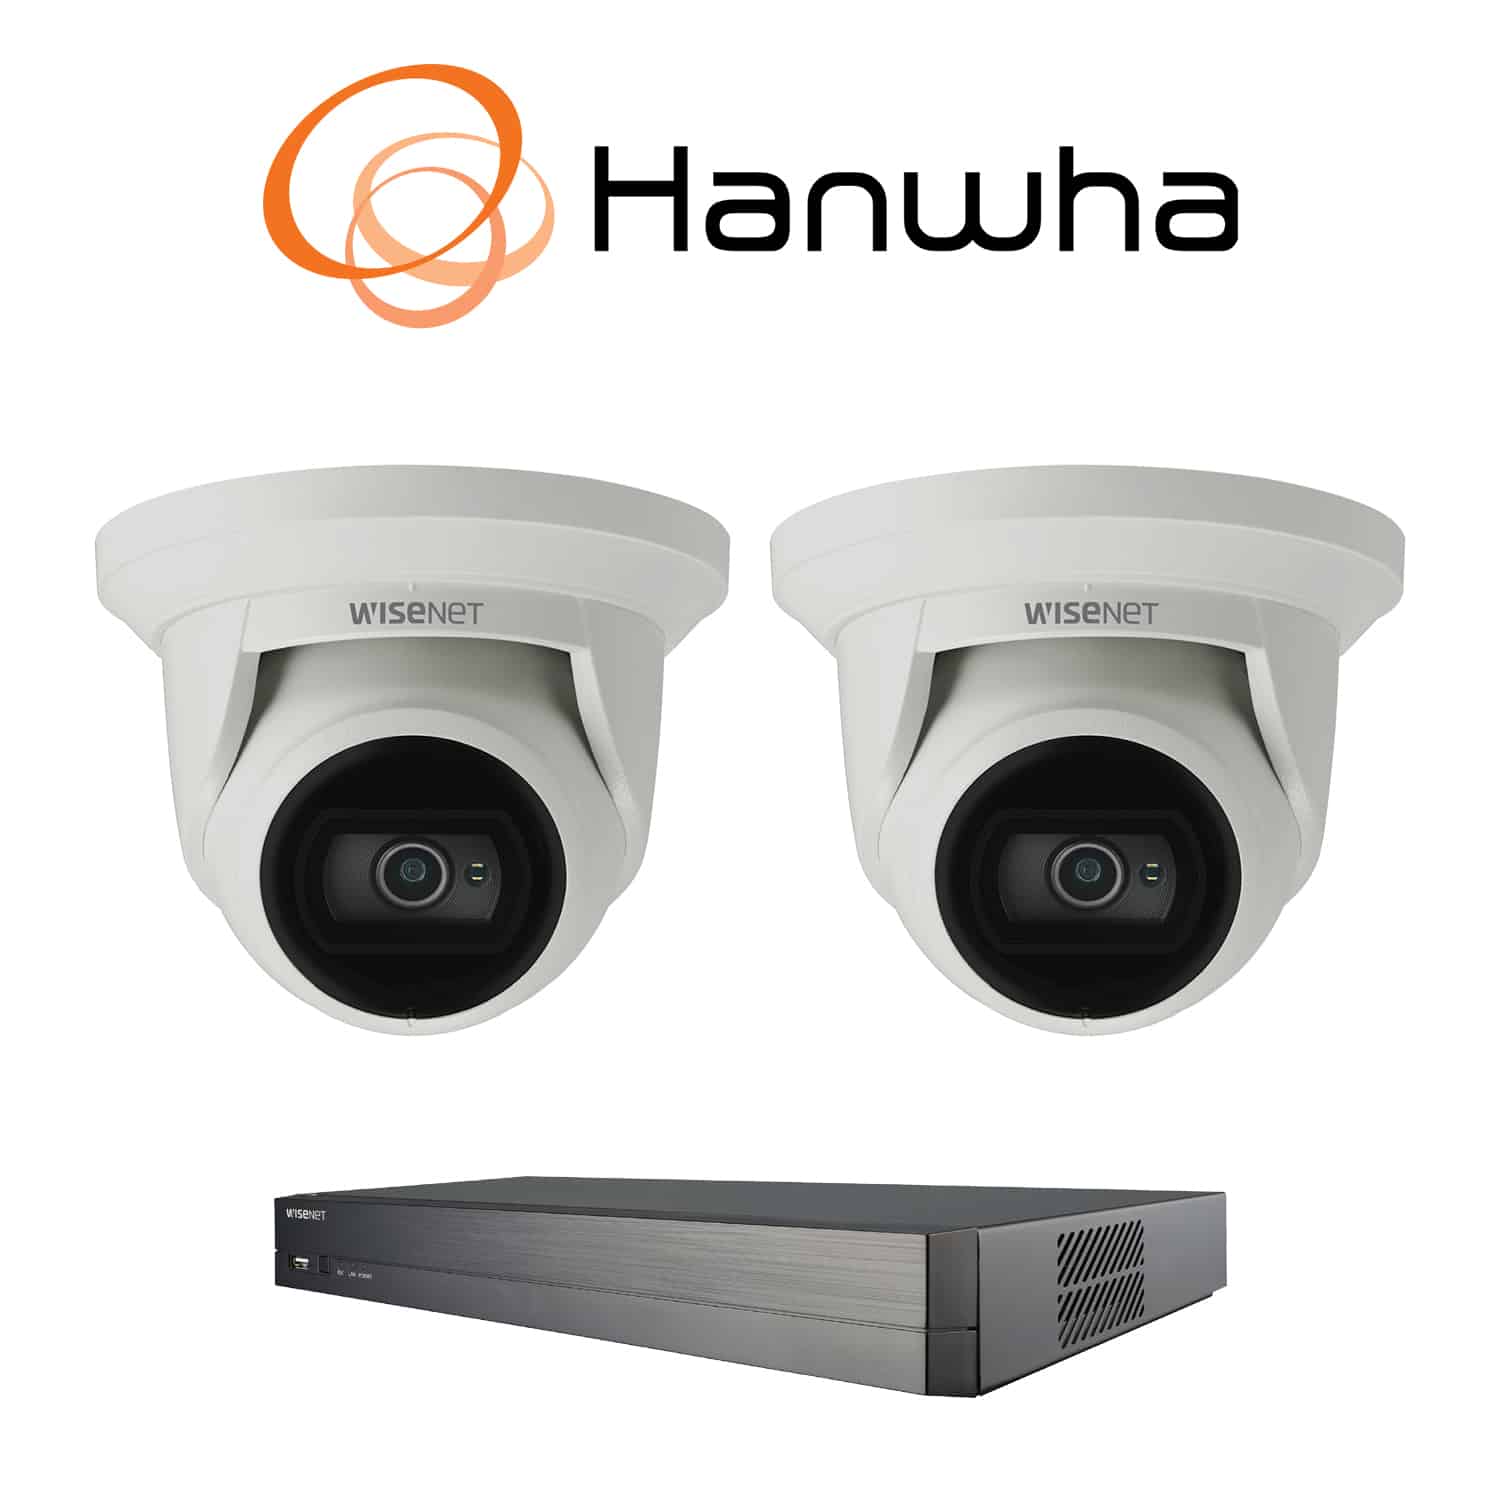 Hanwha 2 camera kit